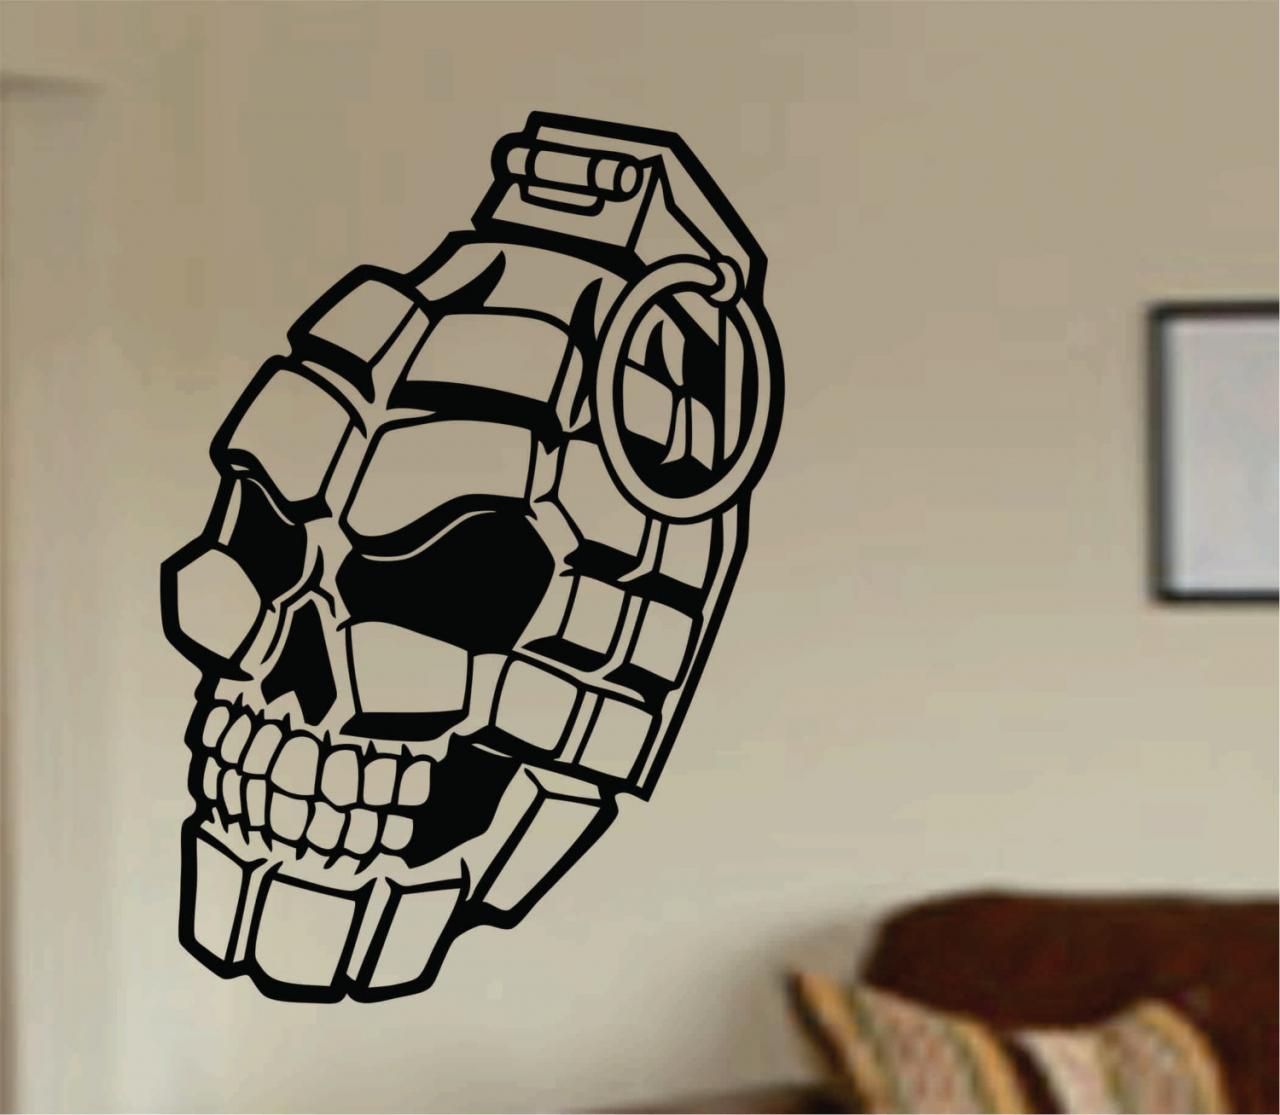 Grenade Skull Decal Sticker Wall Vinyl Kids Army Marines Weapon War Funny